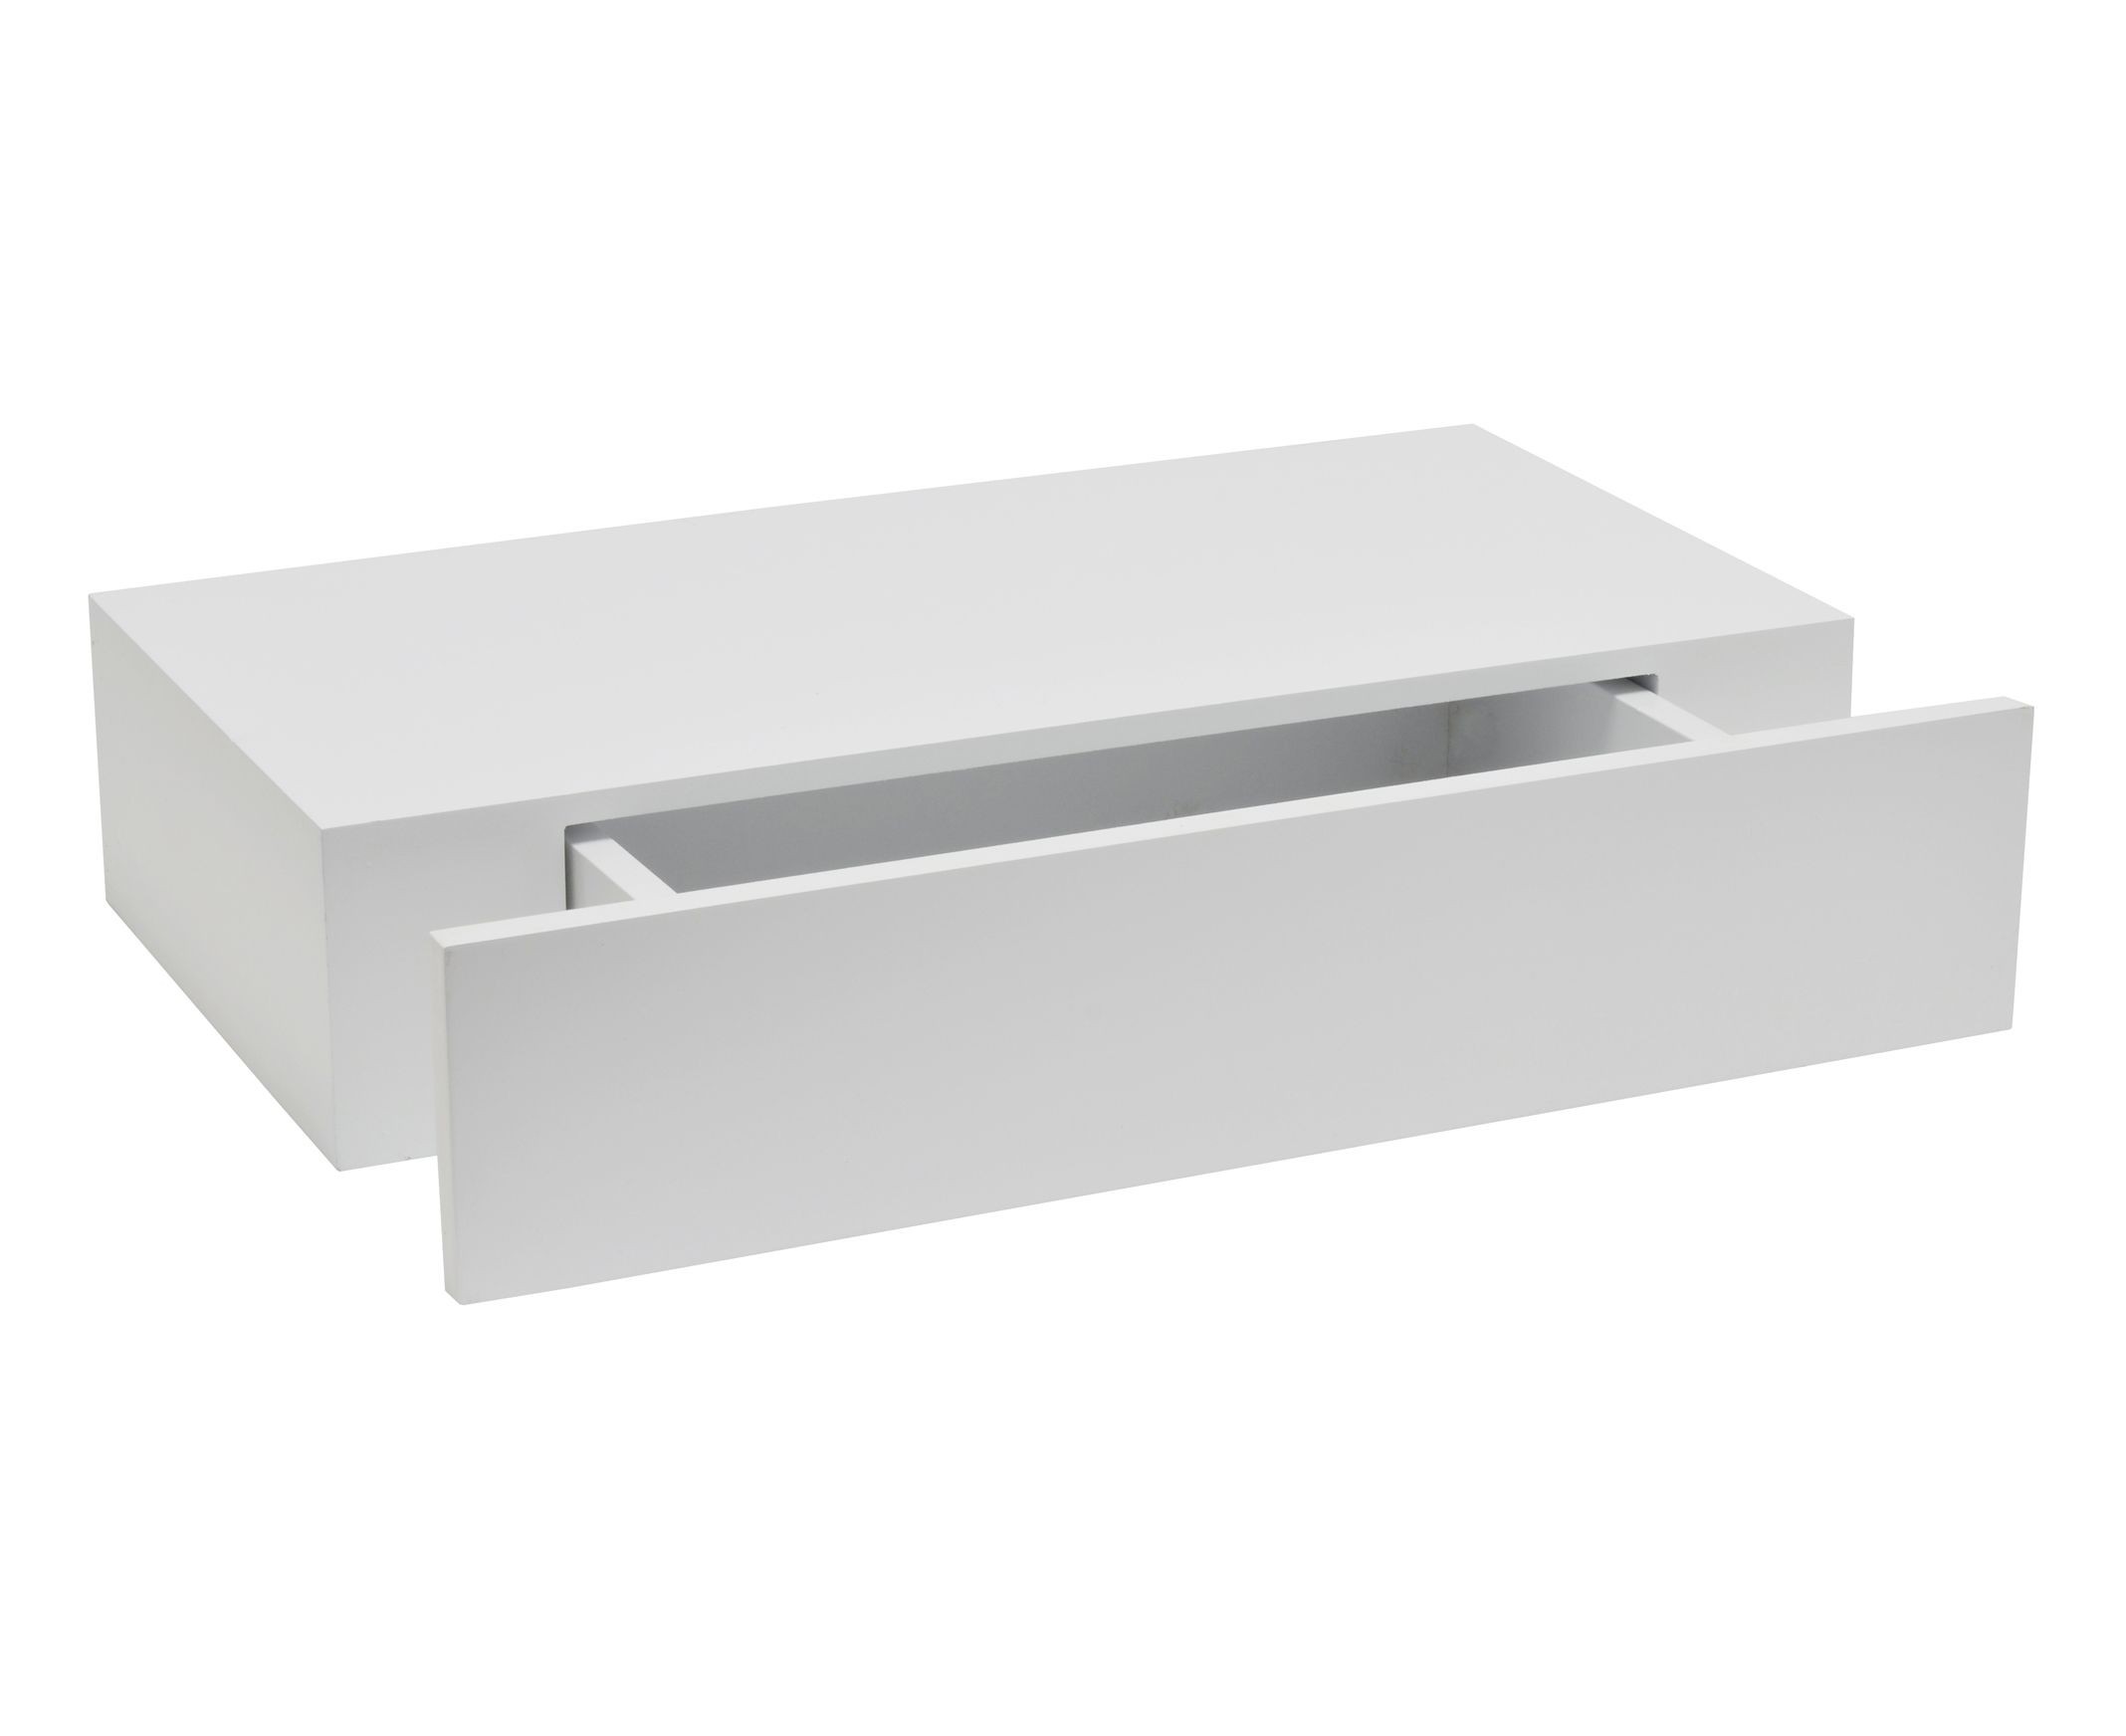 B q chunky floating shelf with drawer white 100h hallway